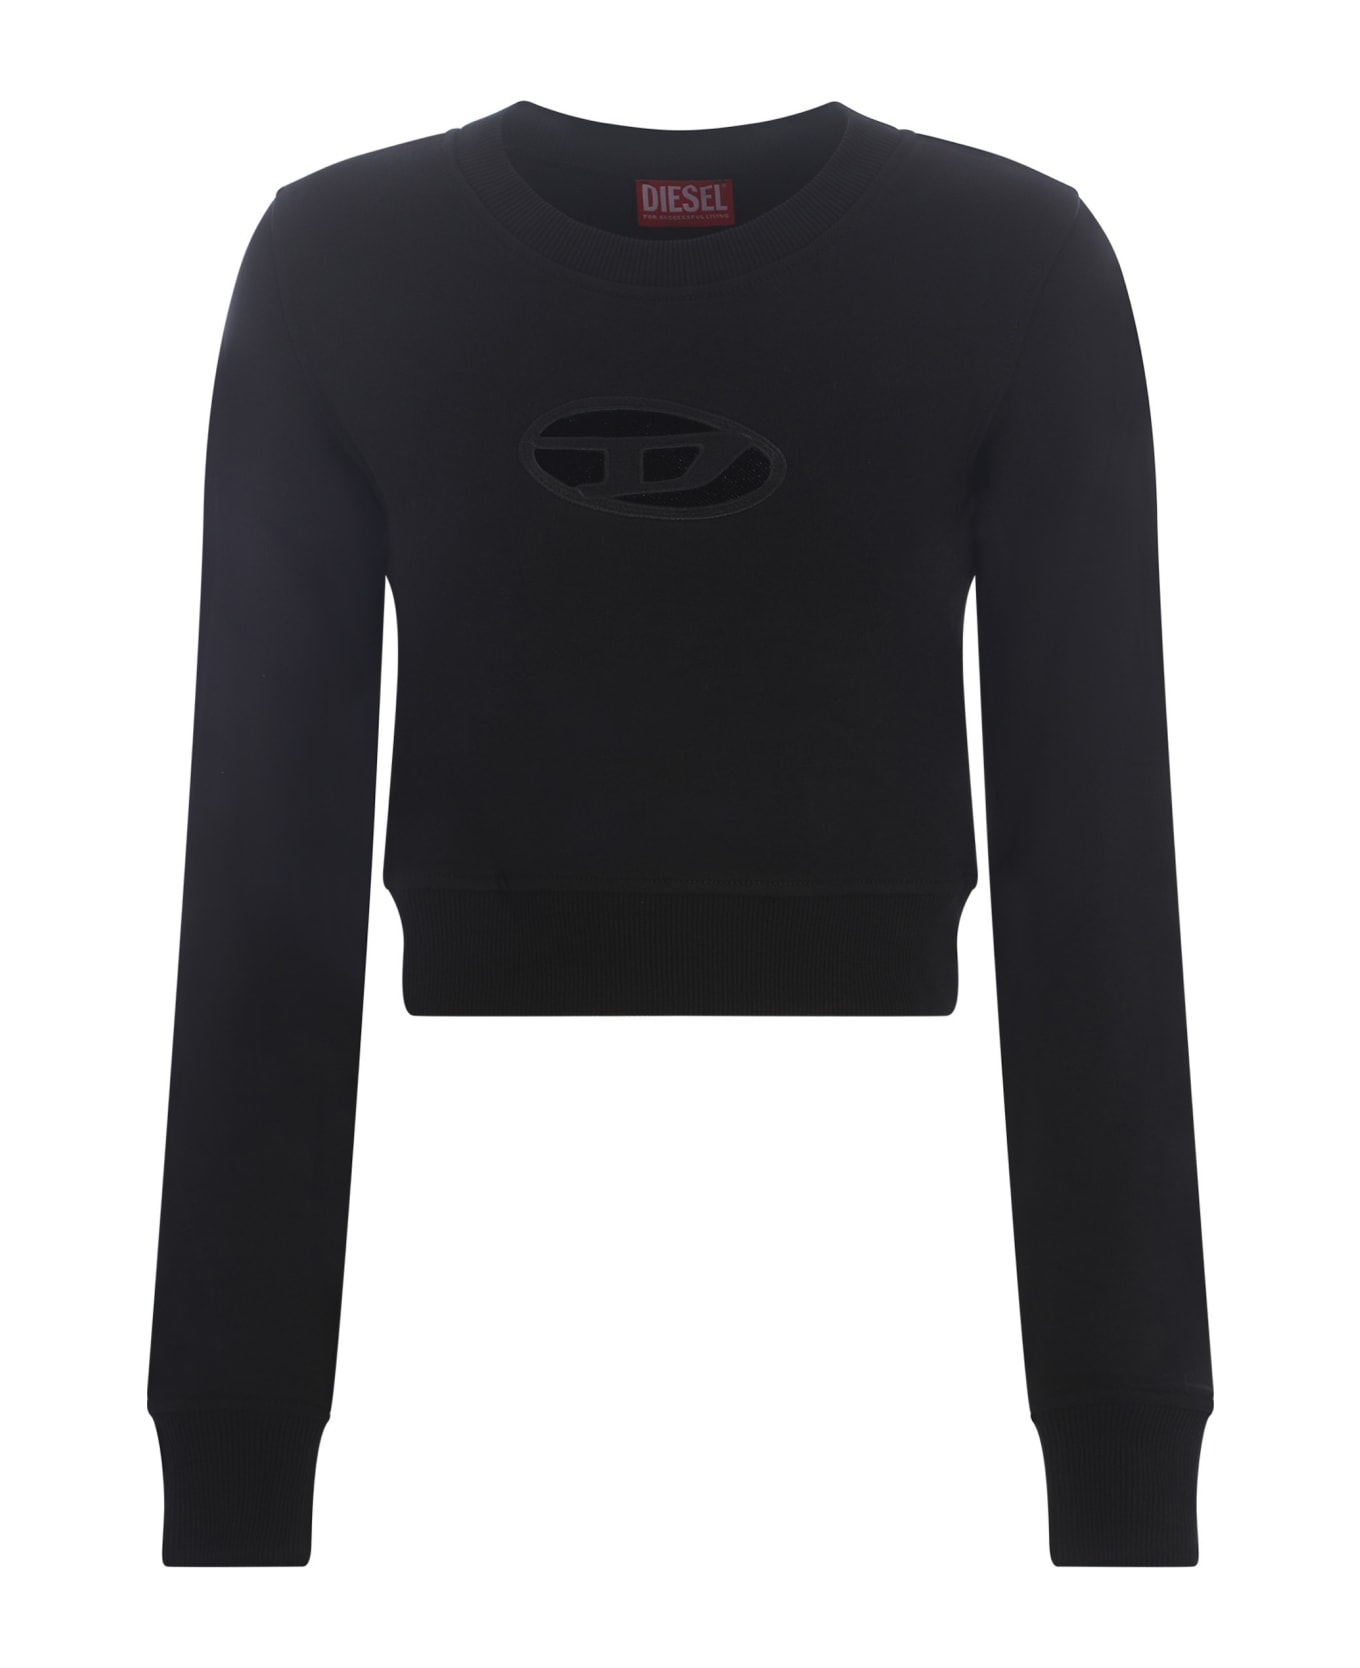 Diesel F-slimmy Cropped Sweatshirt - Black フリース